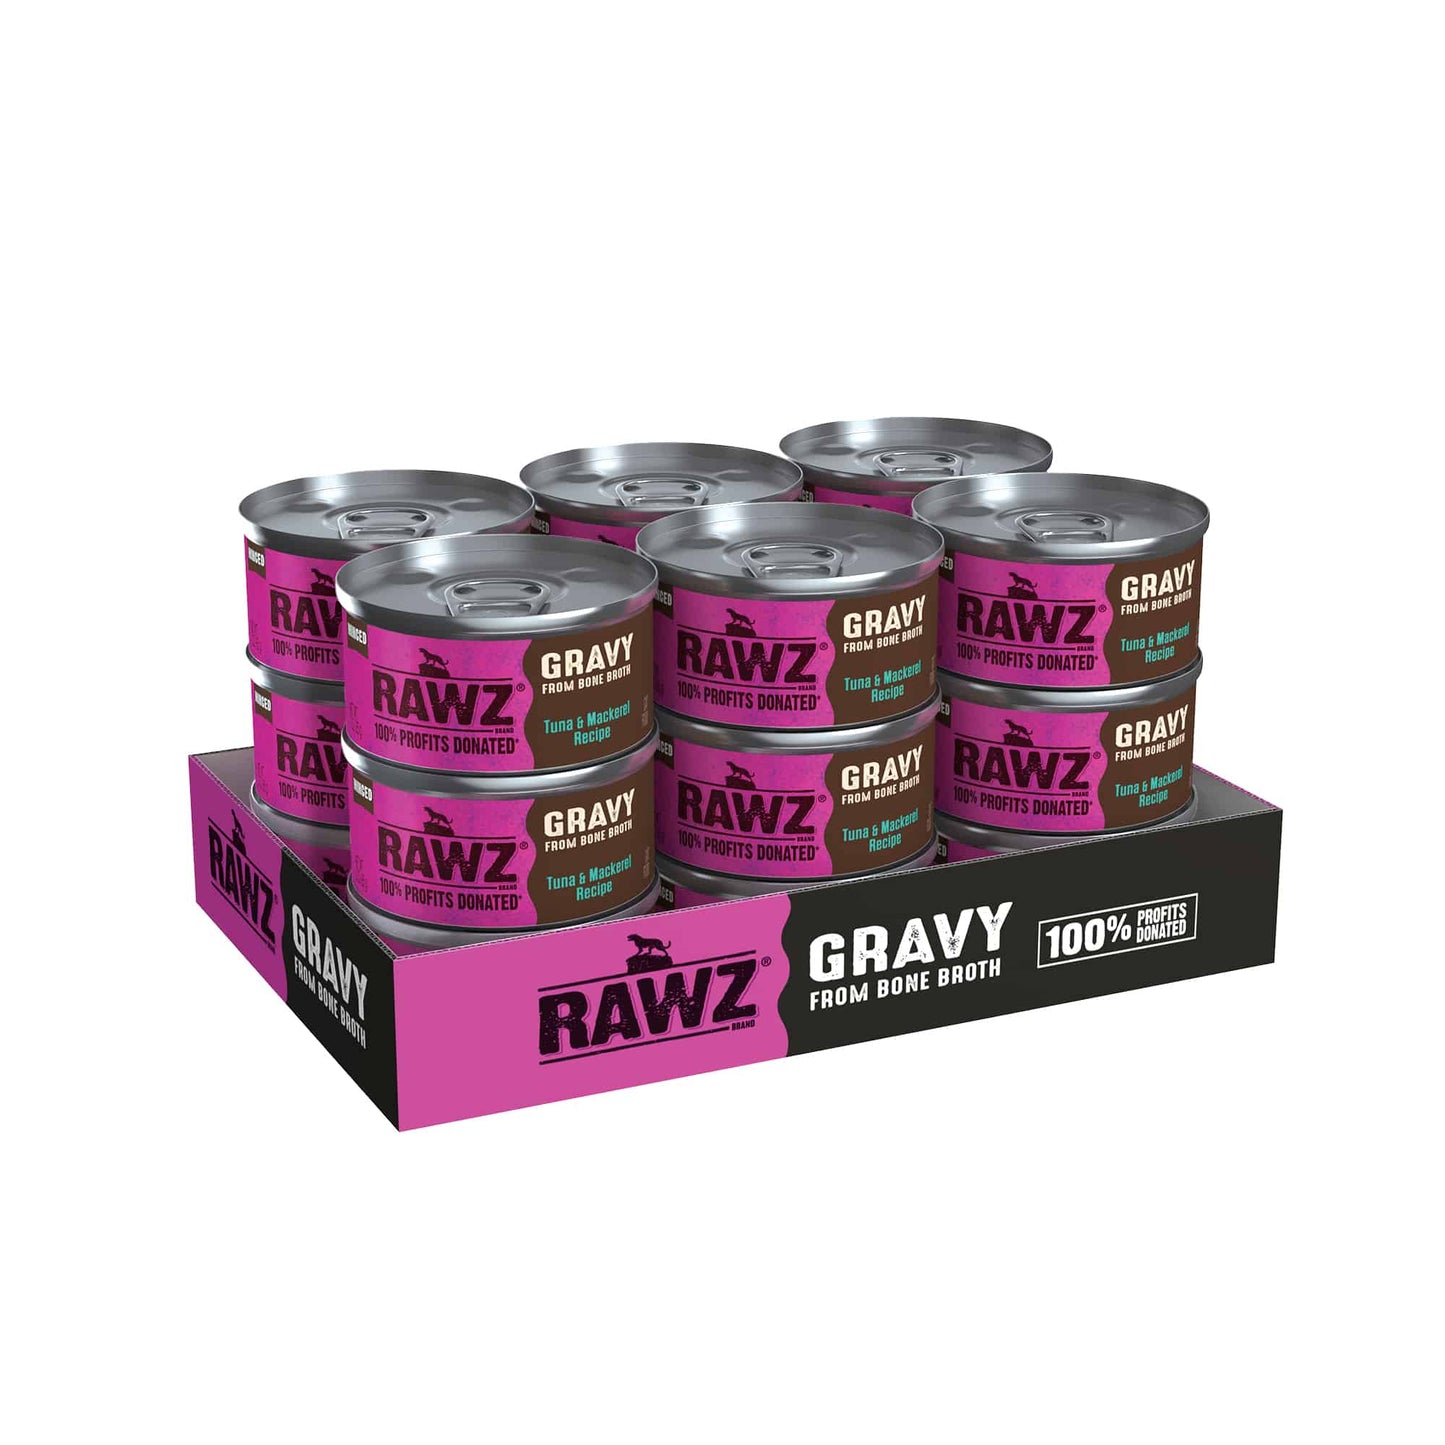 RAWZ Gravy Tuna & Mackerel Canned Cat Food